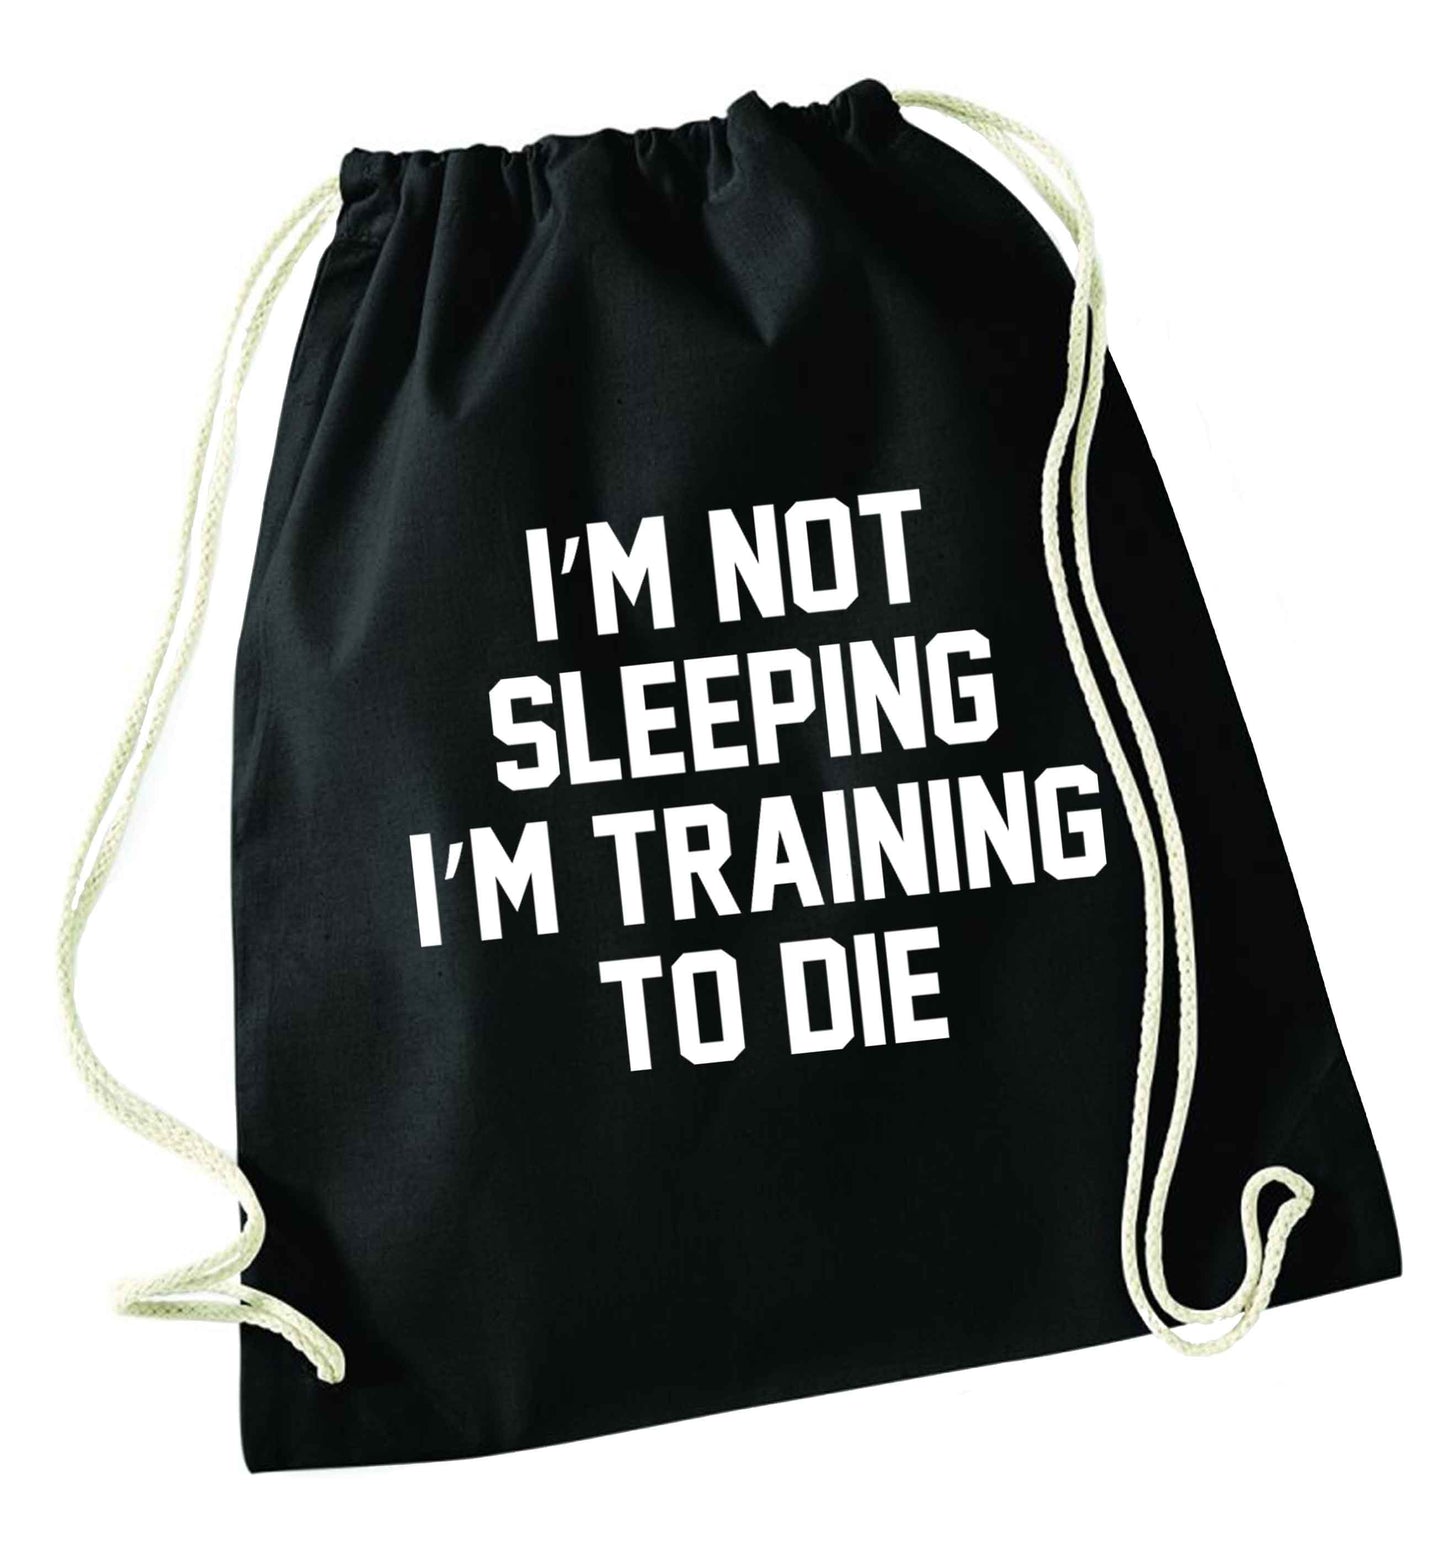 I'm not sleeping I'm training to die black drawstring bag